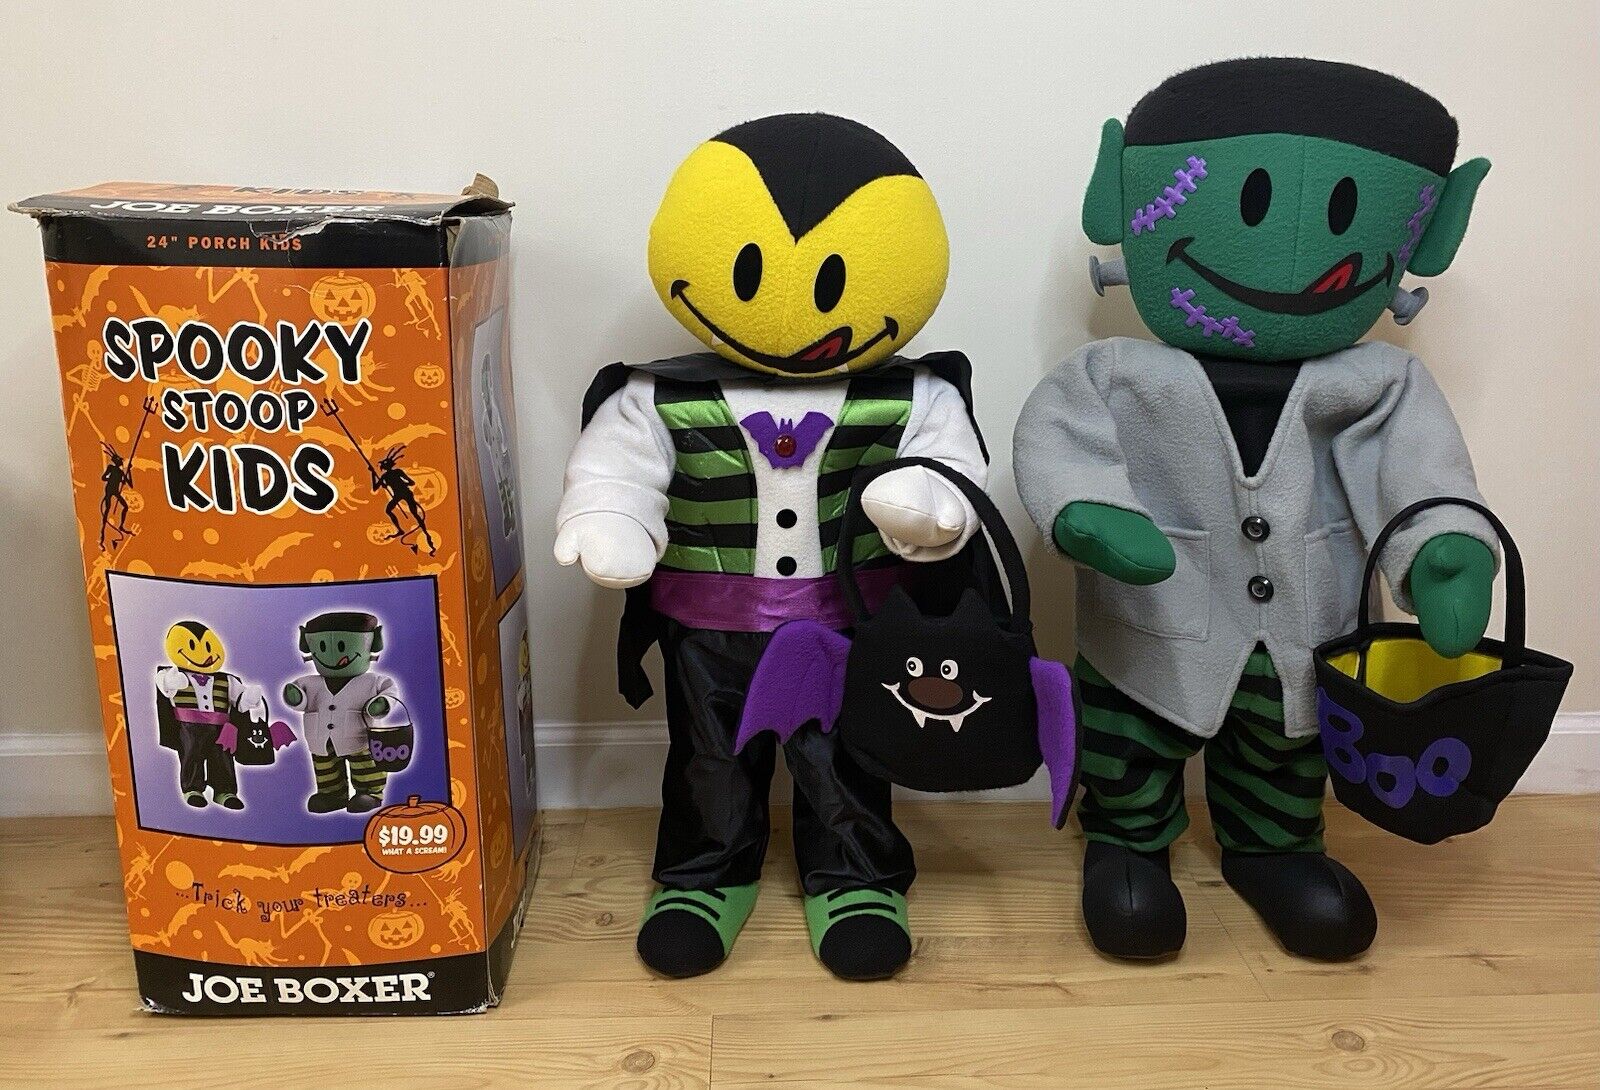 Halloween SPOOKY STOOP KIDs, RARE 24” JOE BOXER Porch Kids  VINTAGE RARE